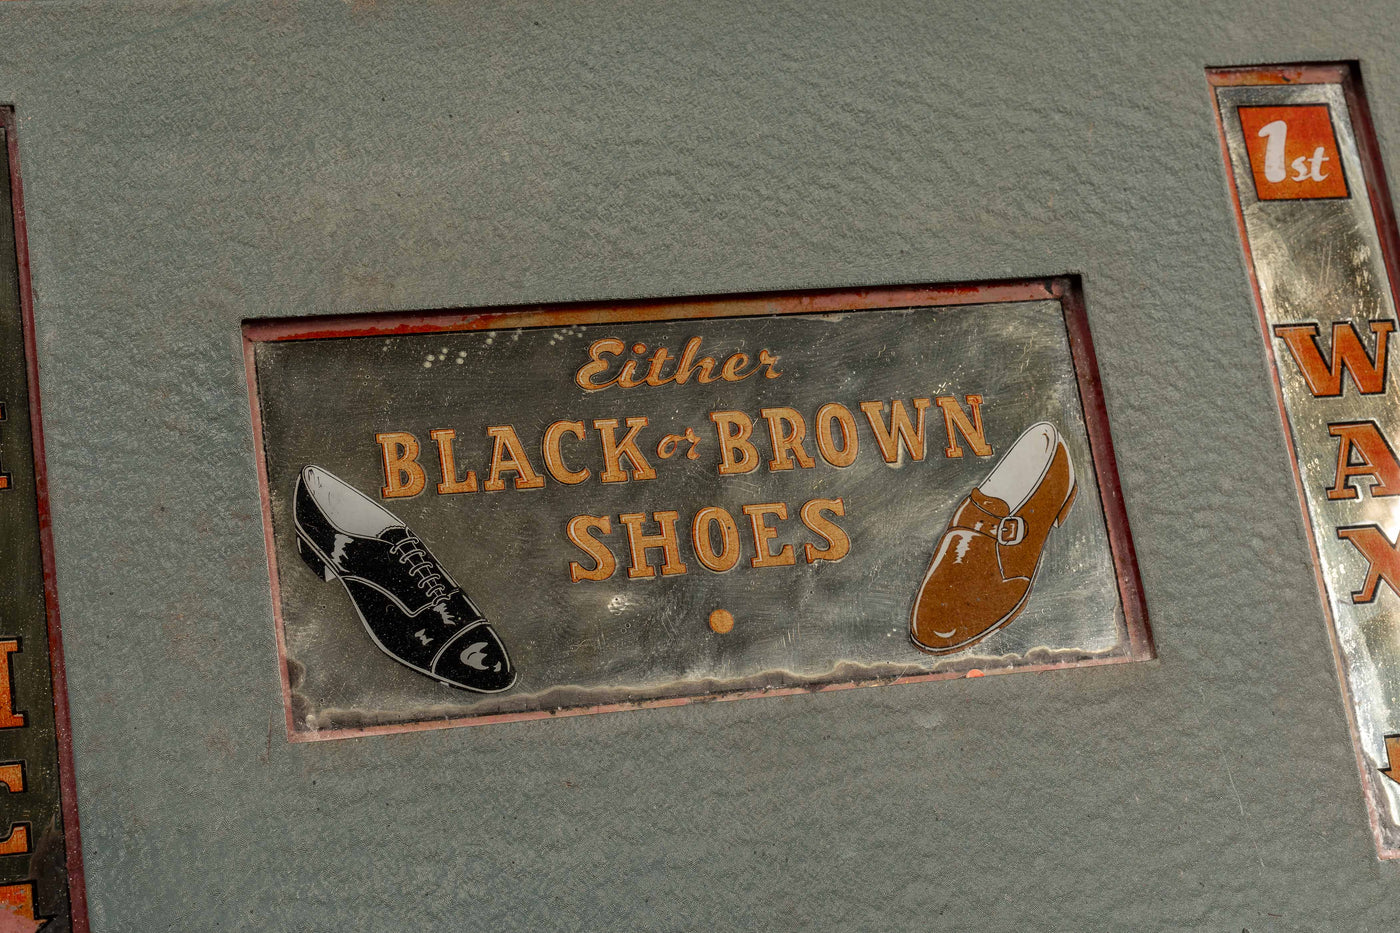 Vintage Coin-Op Shoe Shine Machine